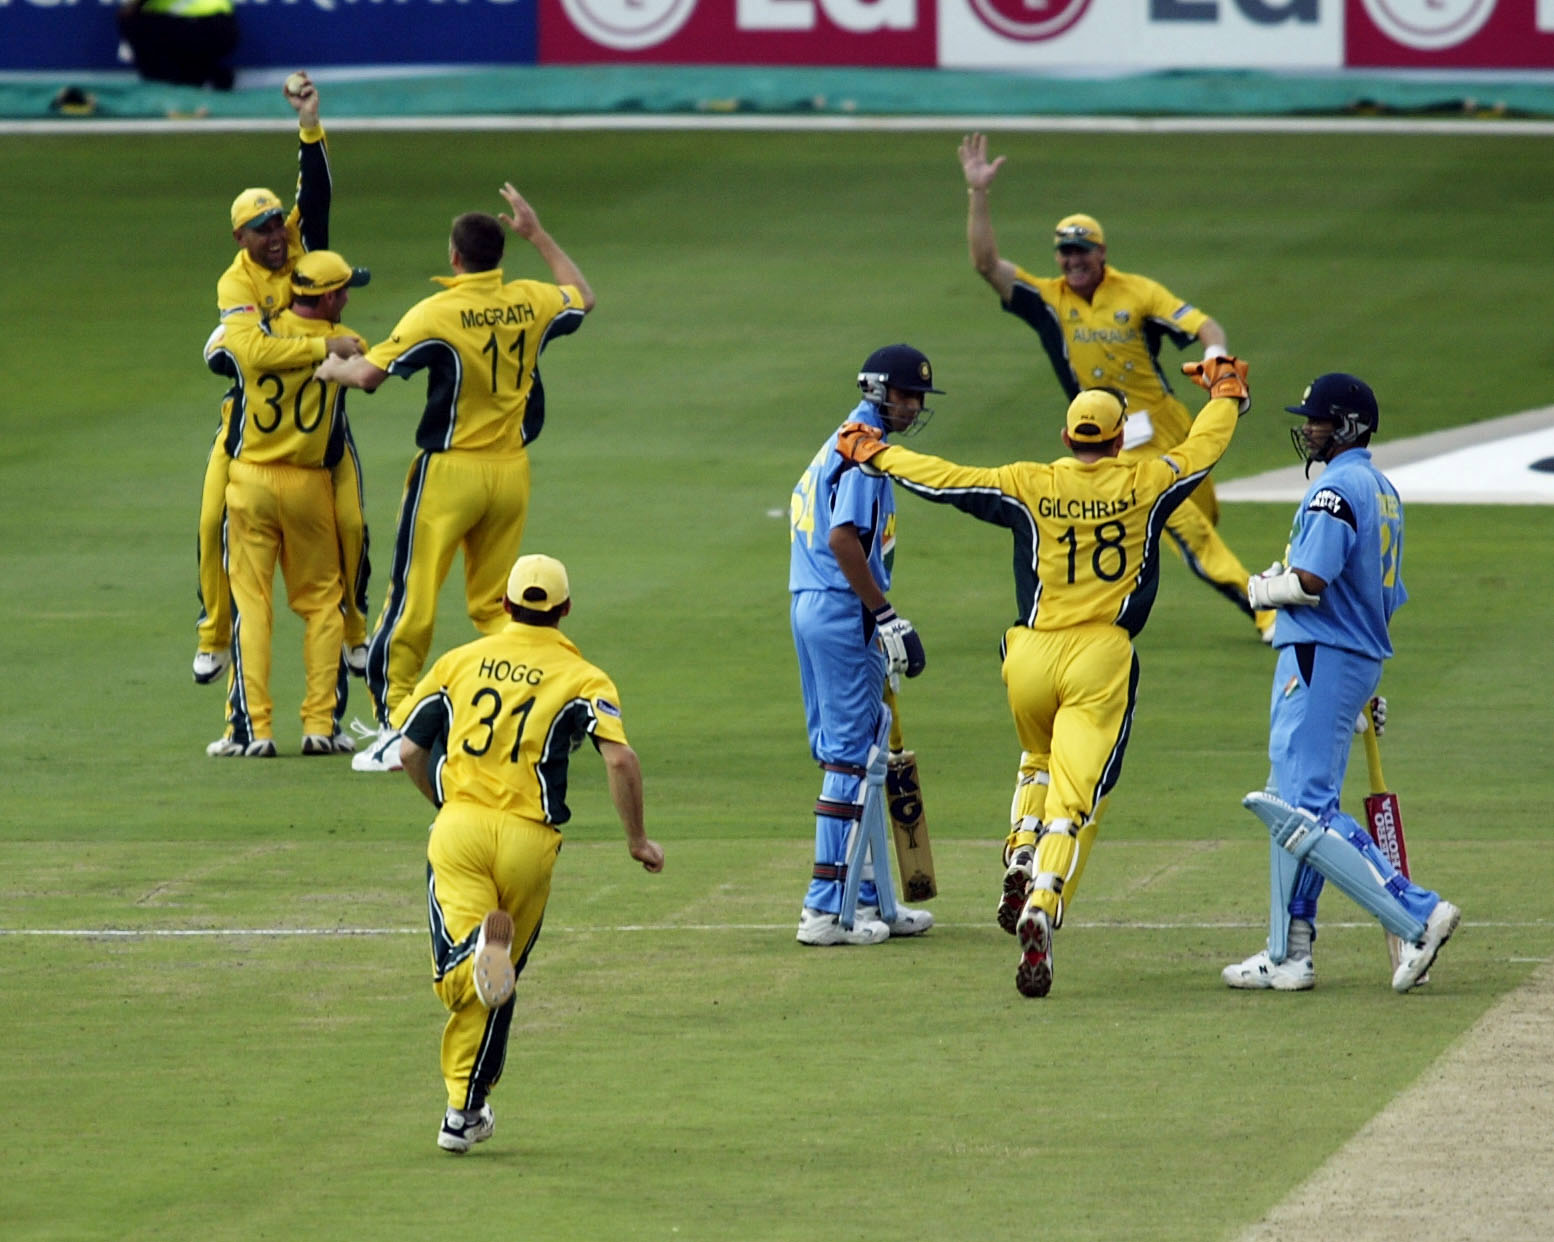 Clash of the Titans: Australia vs India in the Cricket World Cup final